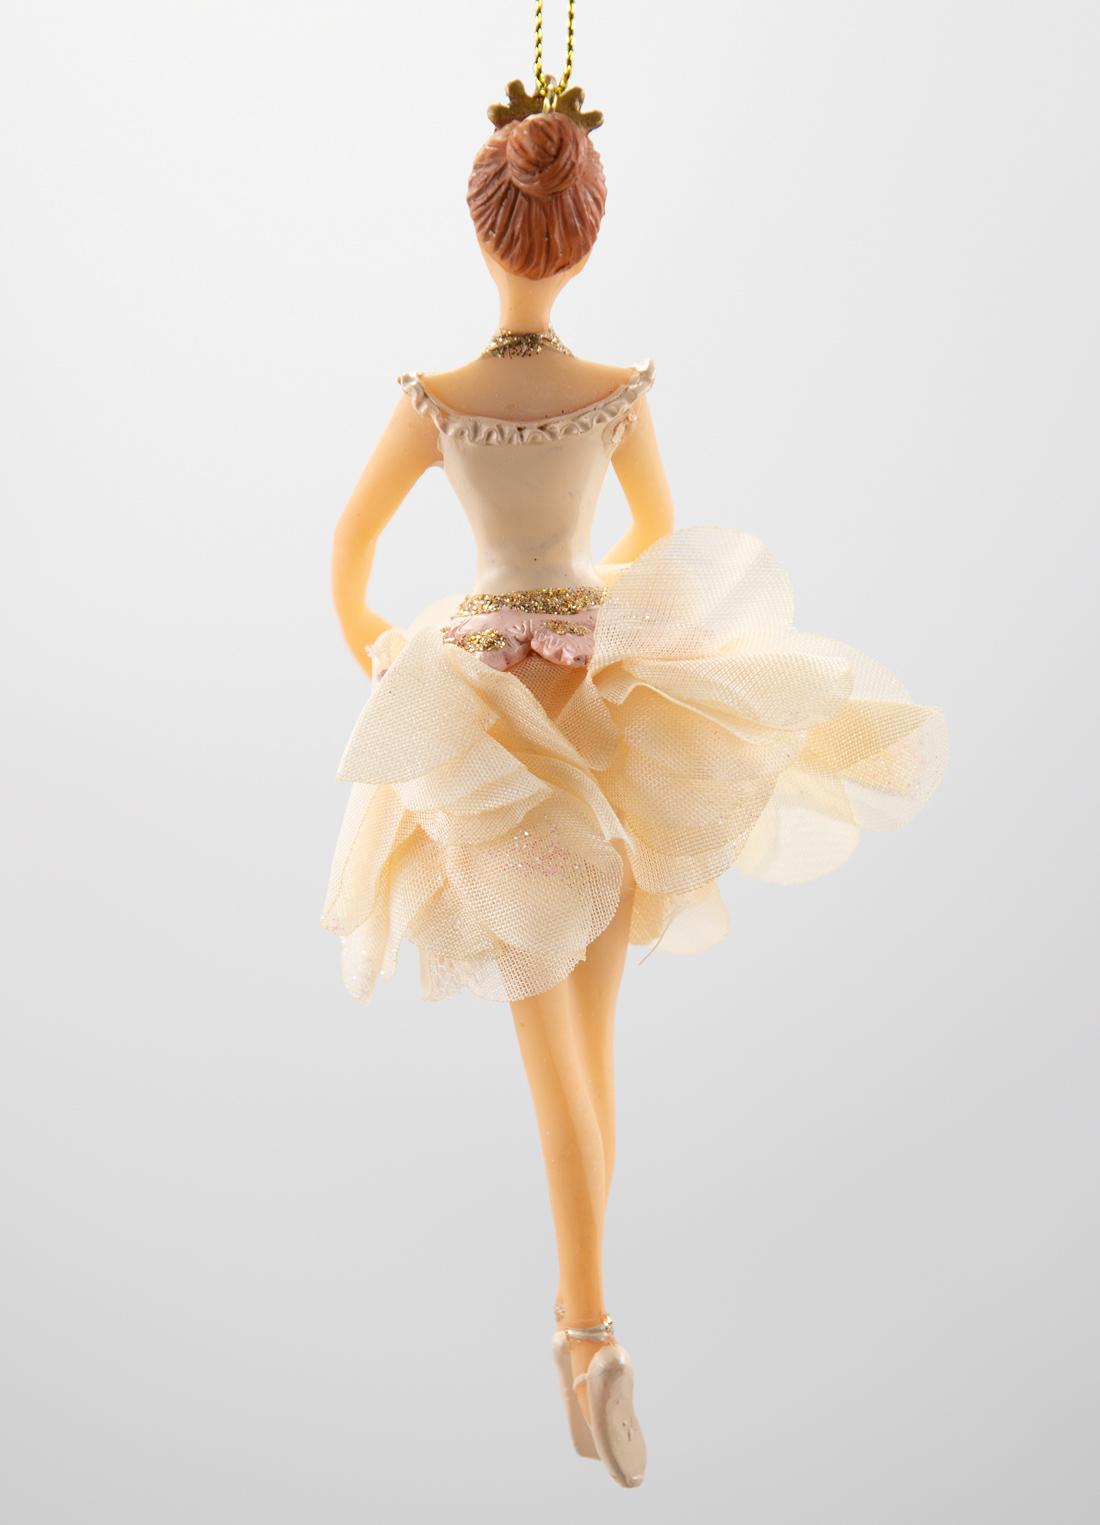 Ballerina Tänzerin Christbaumschmuck 